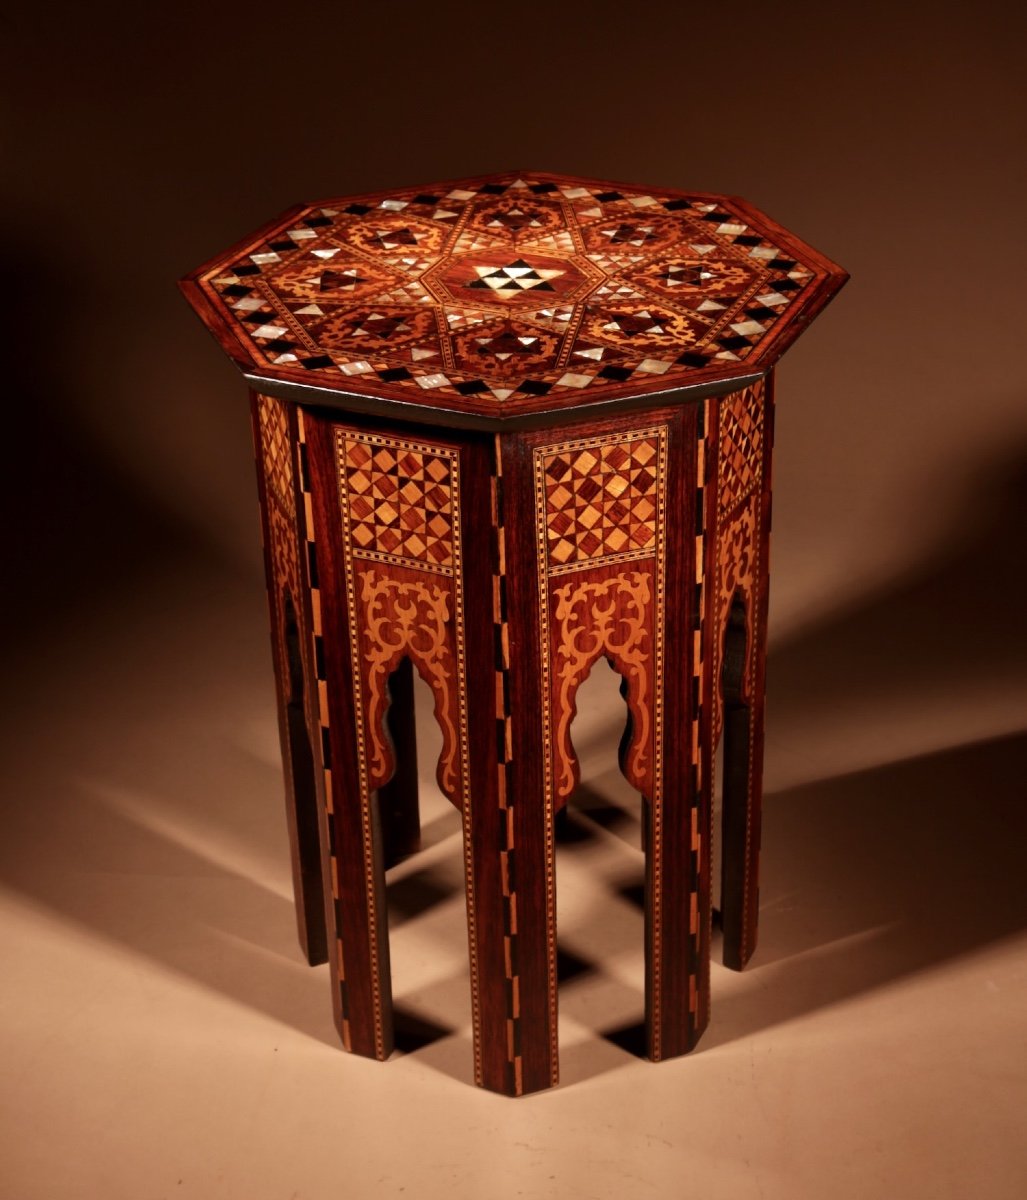  Maure, Moyen-orient Original Antique Insolite Complexe Incrusté 8 Faces Table Empire Ottoman V